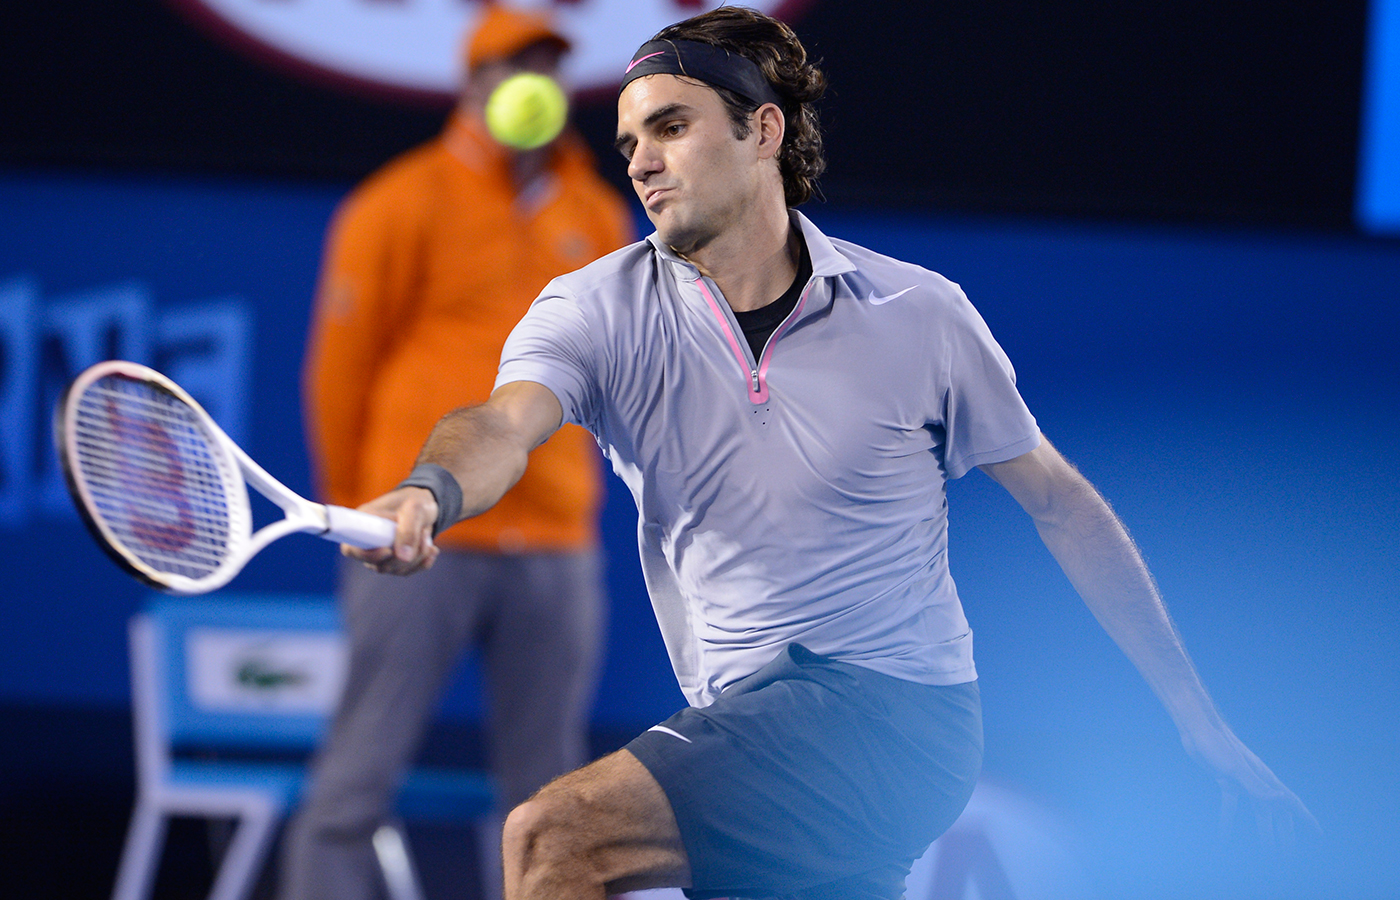 Roger Federer photo 1287 of 1750 pics, wallpaper - photo #571362 ...